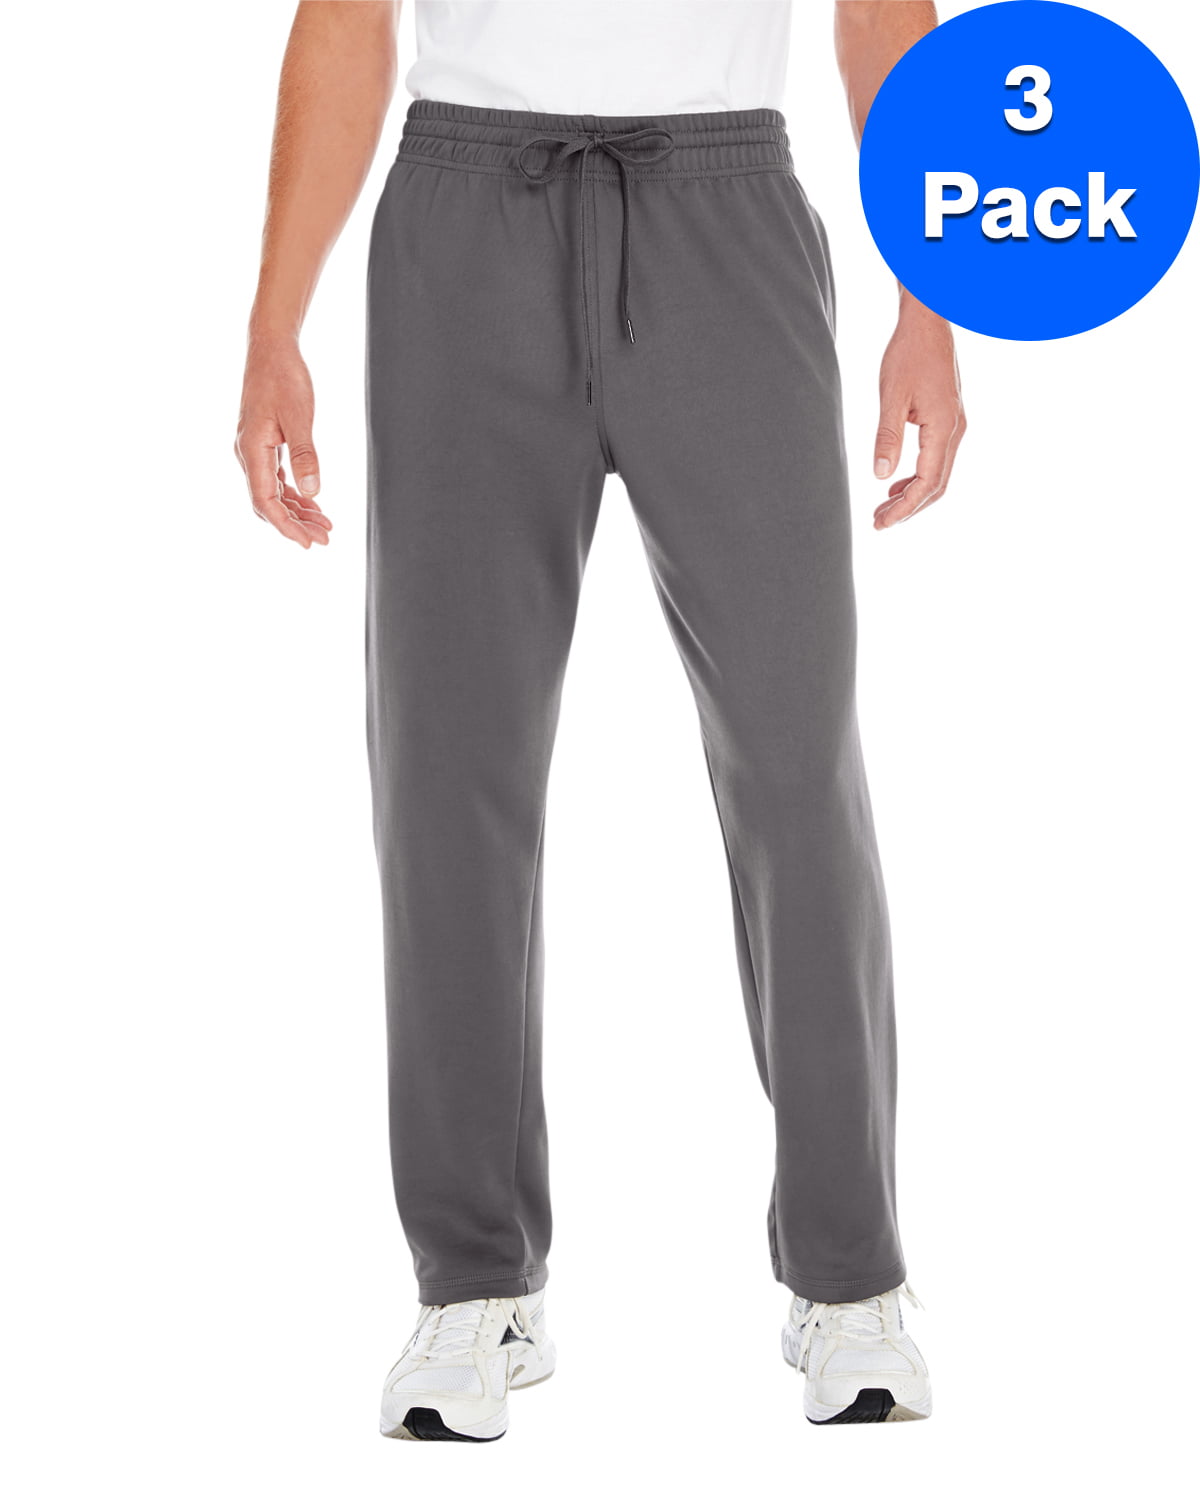 Performance Tech Open Bottom Sweatpants with Pockets 3 Pack - Walmart.com